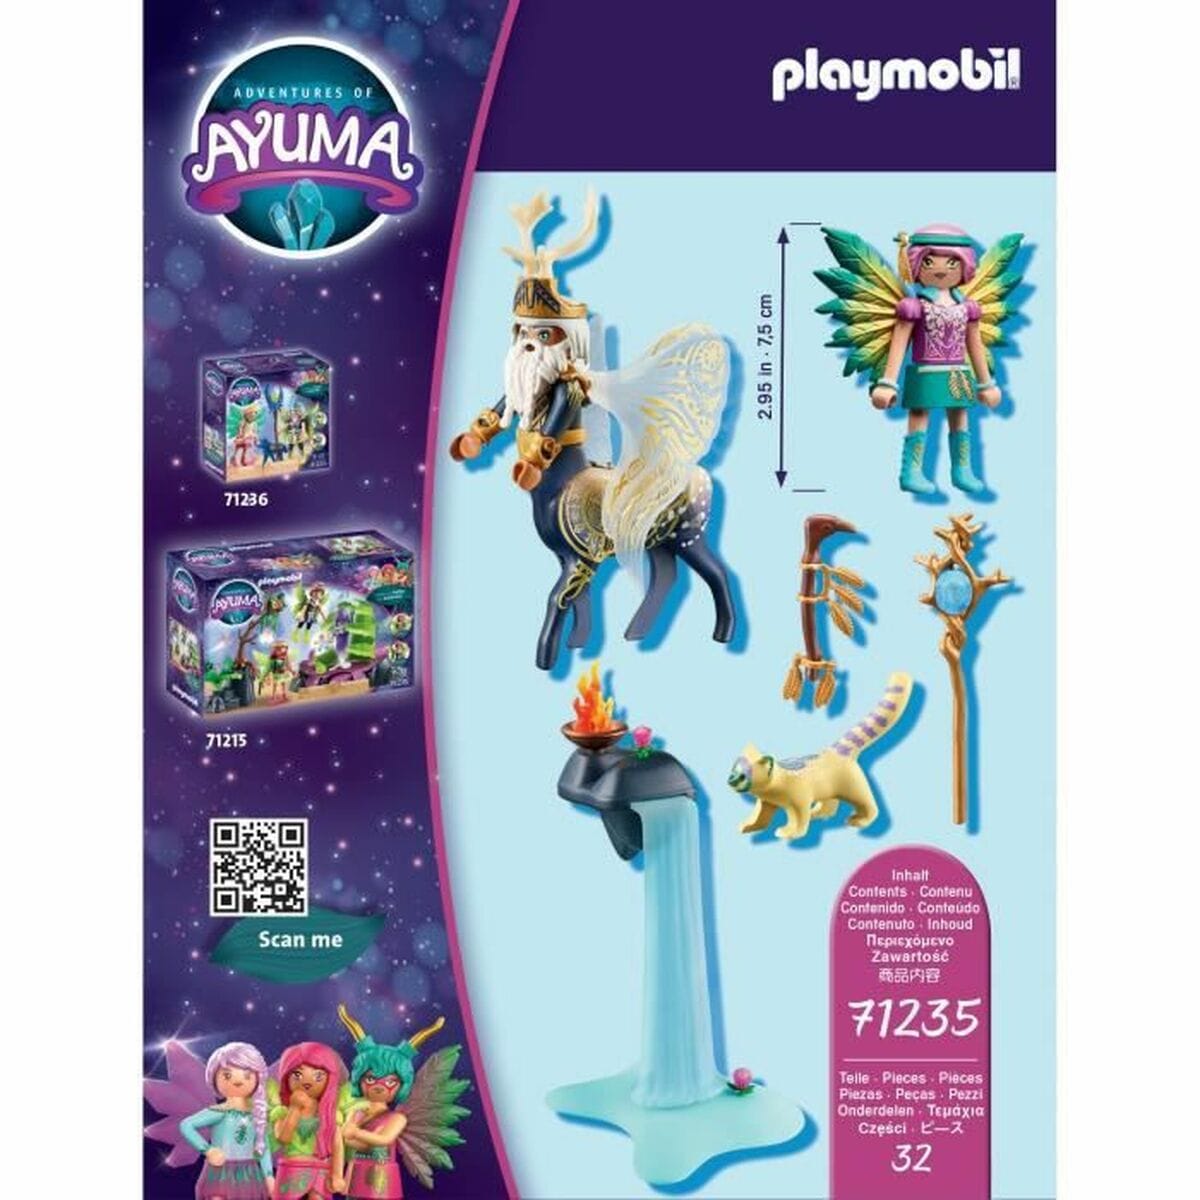 Playmobil Spielzeug | Kostüme > Spielzeug und Spiele > Action-Figuren Playset Playmobil Ayuma